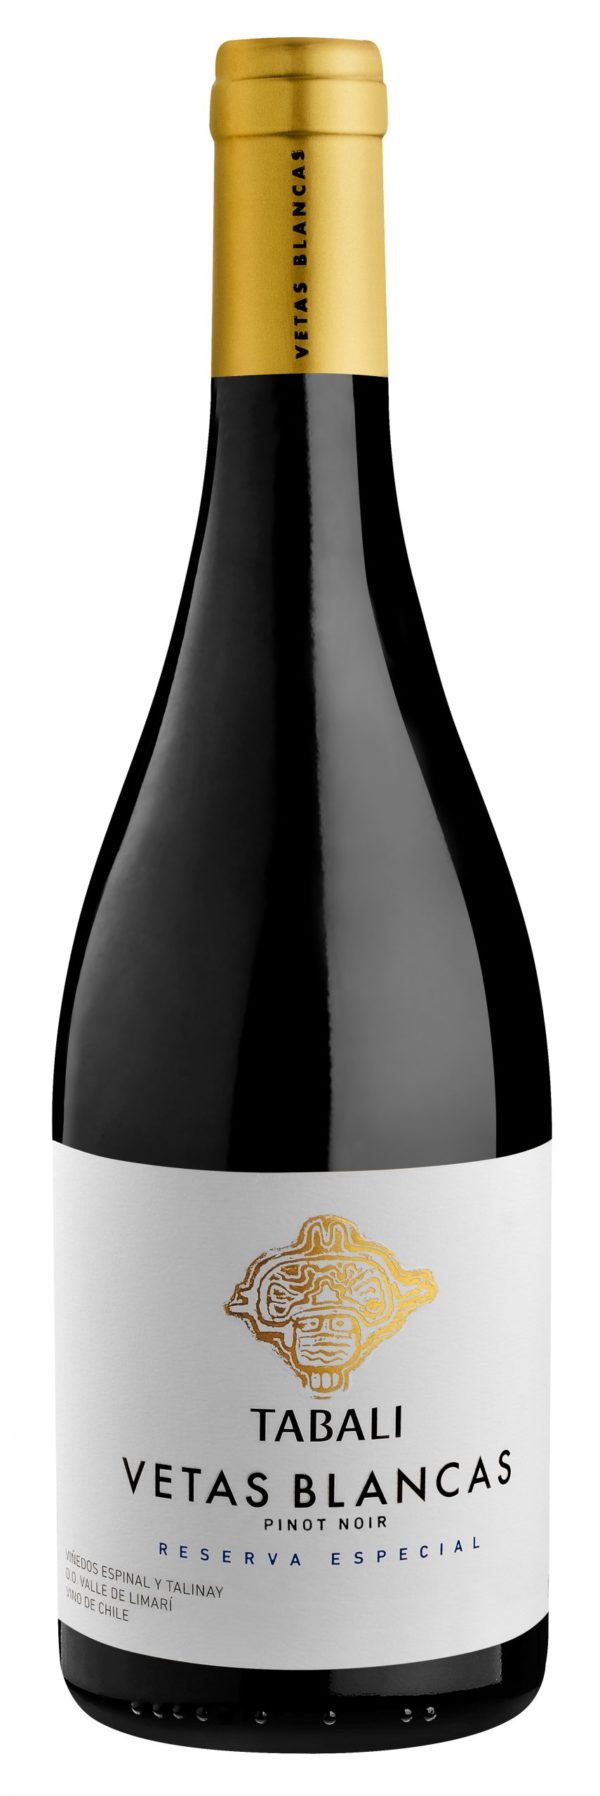 Pinot Noir, Vetas Blancas Reserva Especial, Tabali